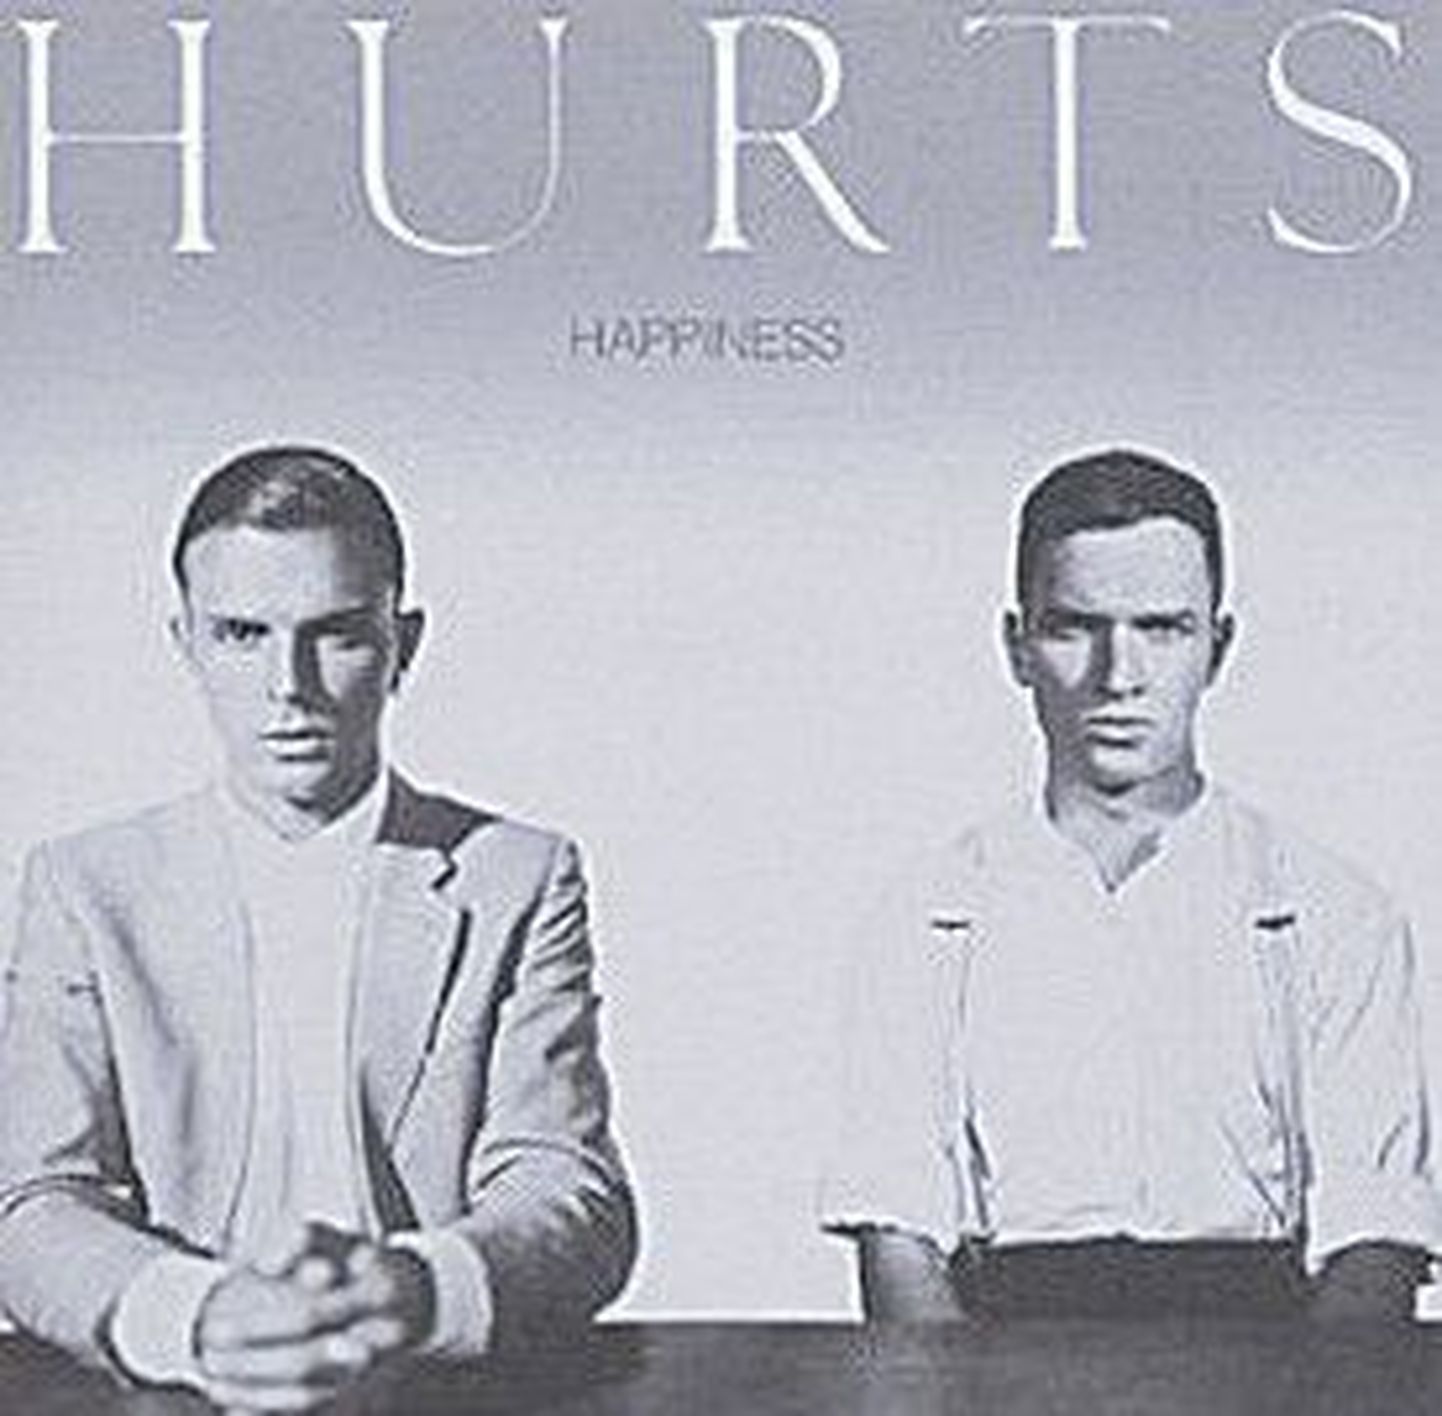 Hurts
Happiness 
(Sony)